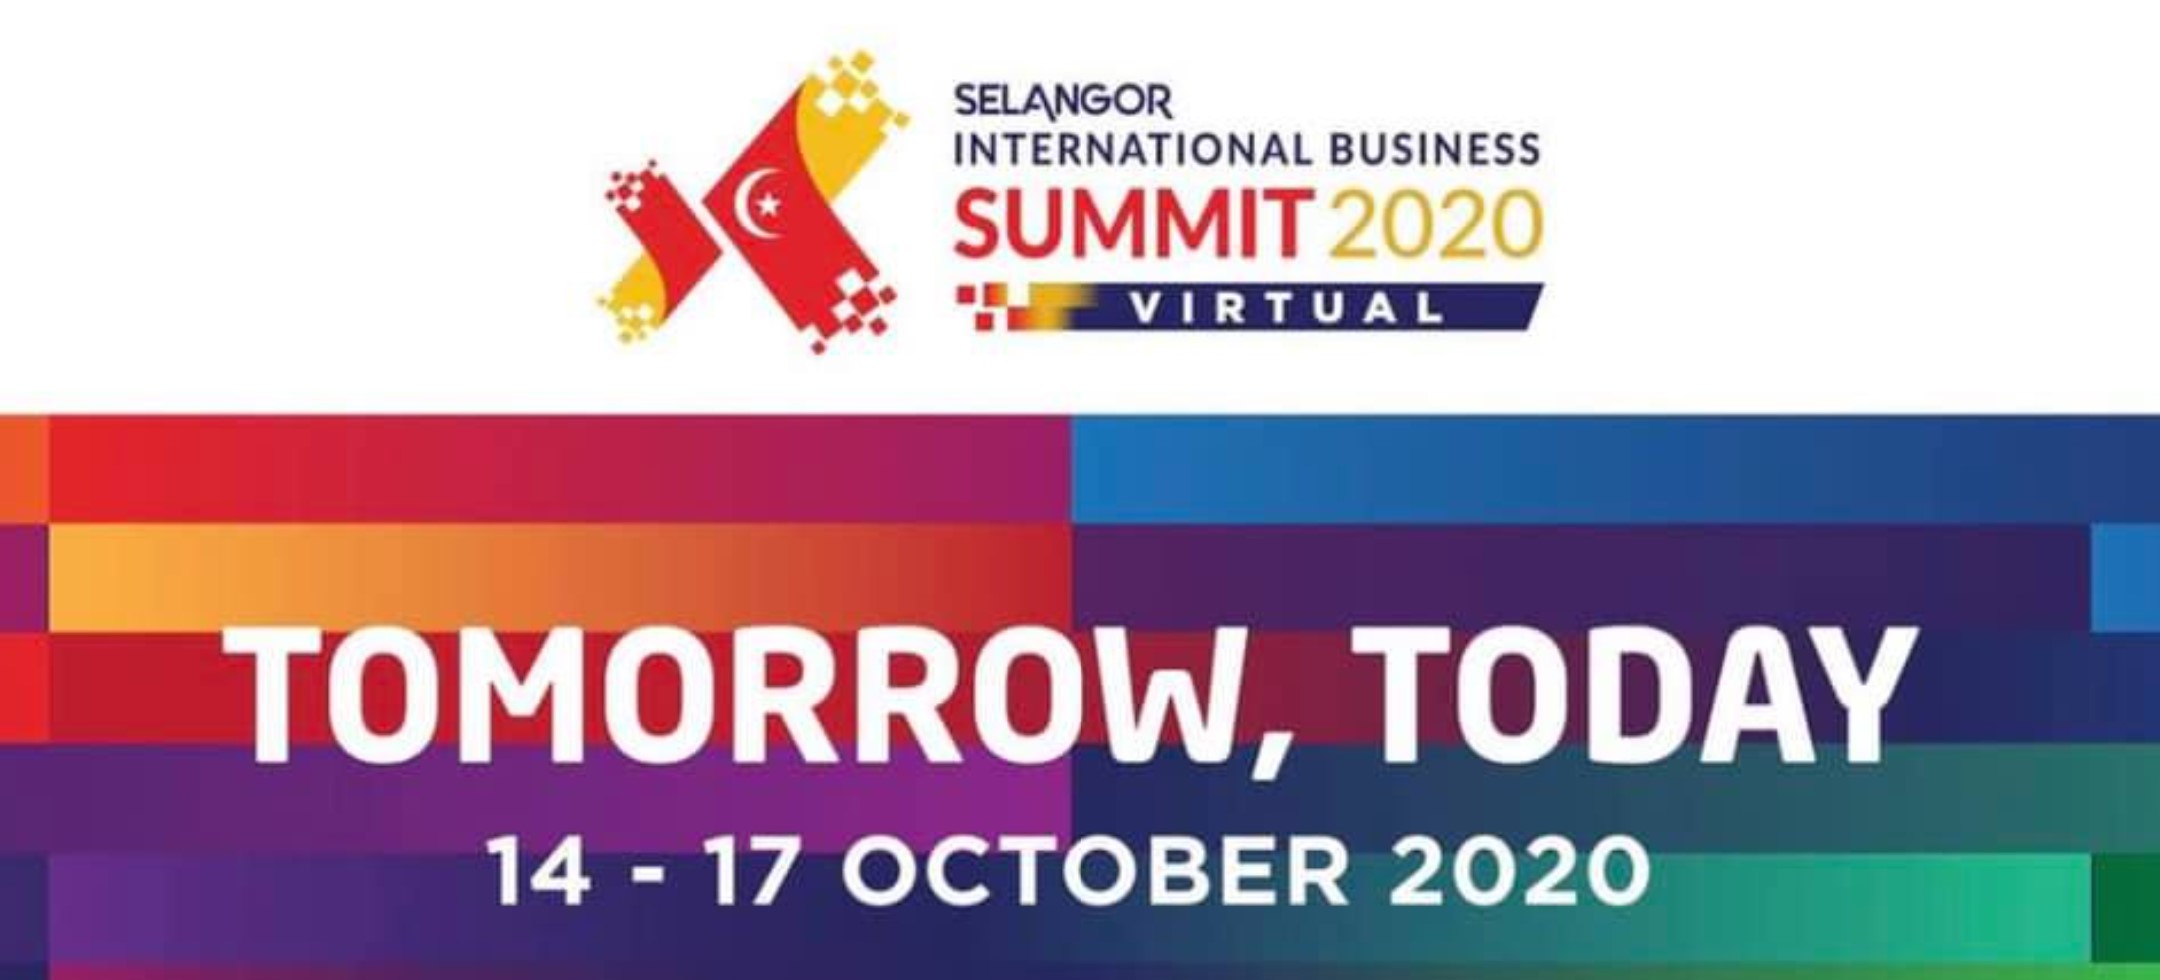 Selangor Summit 2020 Virtual